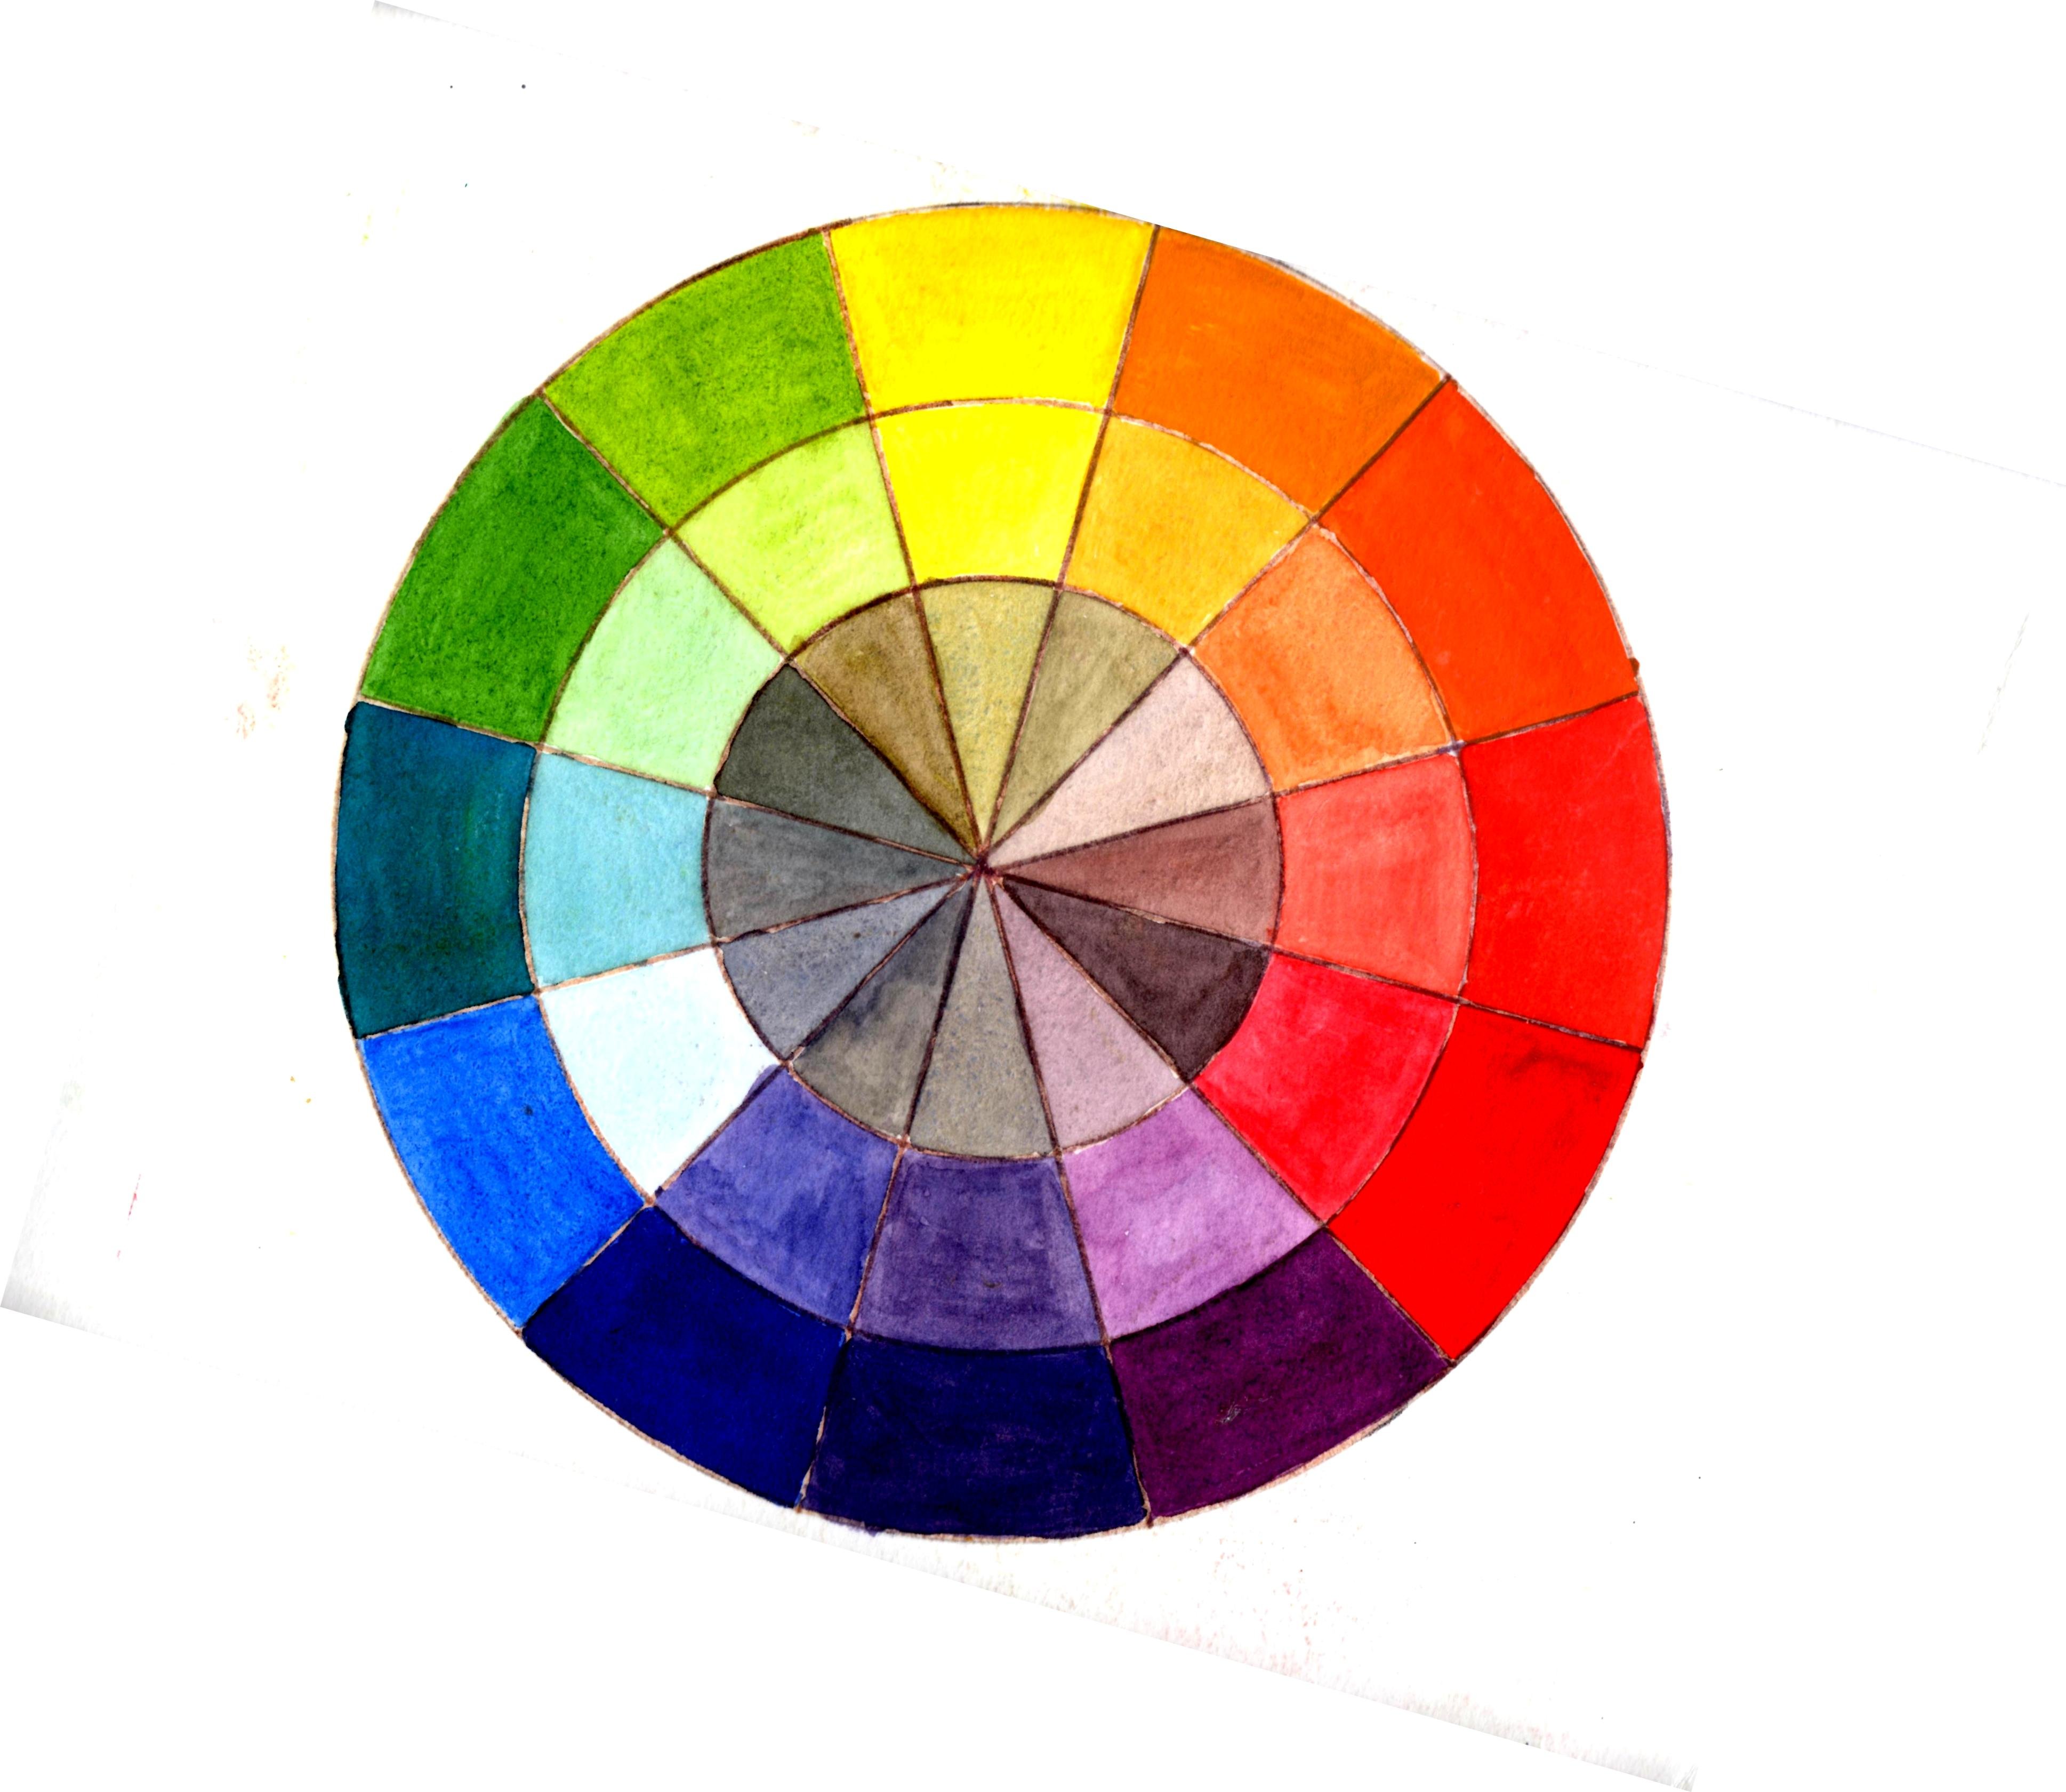 Цветовой круг Иоханнеса Иттена. Цветовой круг Иттена акварелью. Цветовой круг Иттена 12 цветов. Иоганнес Иттен цветовой круг.